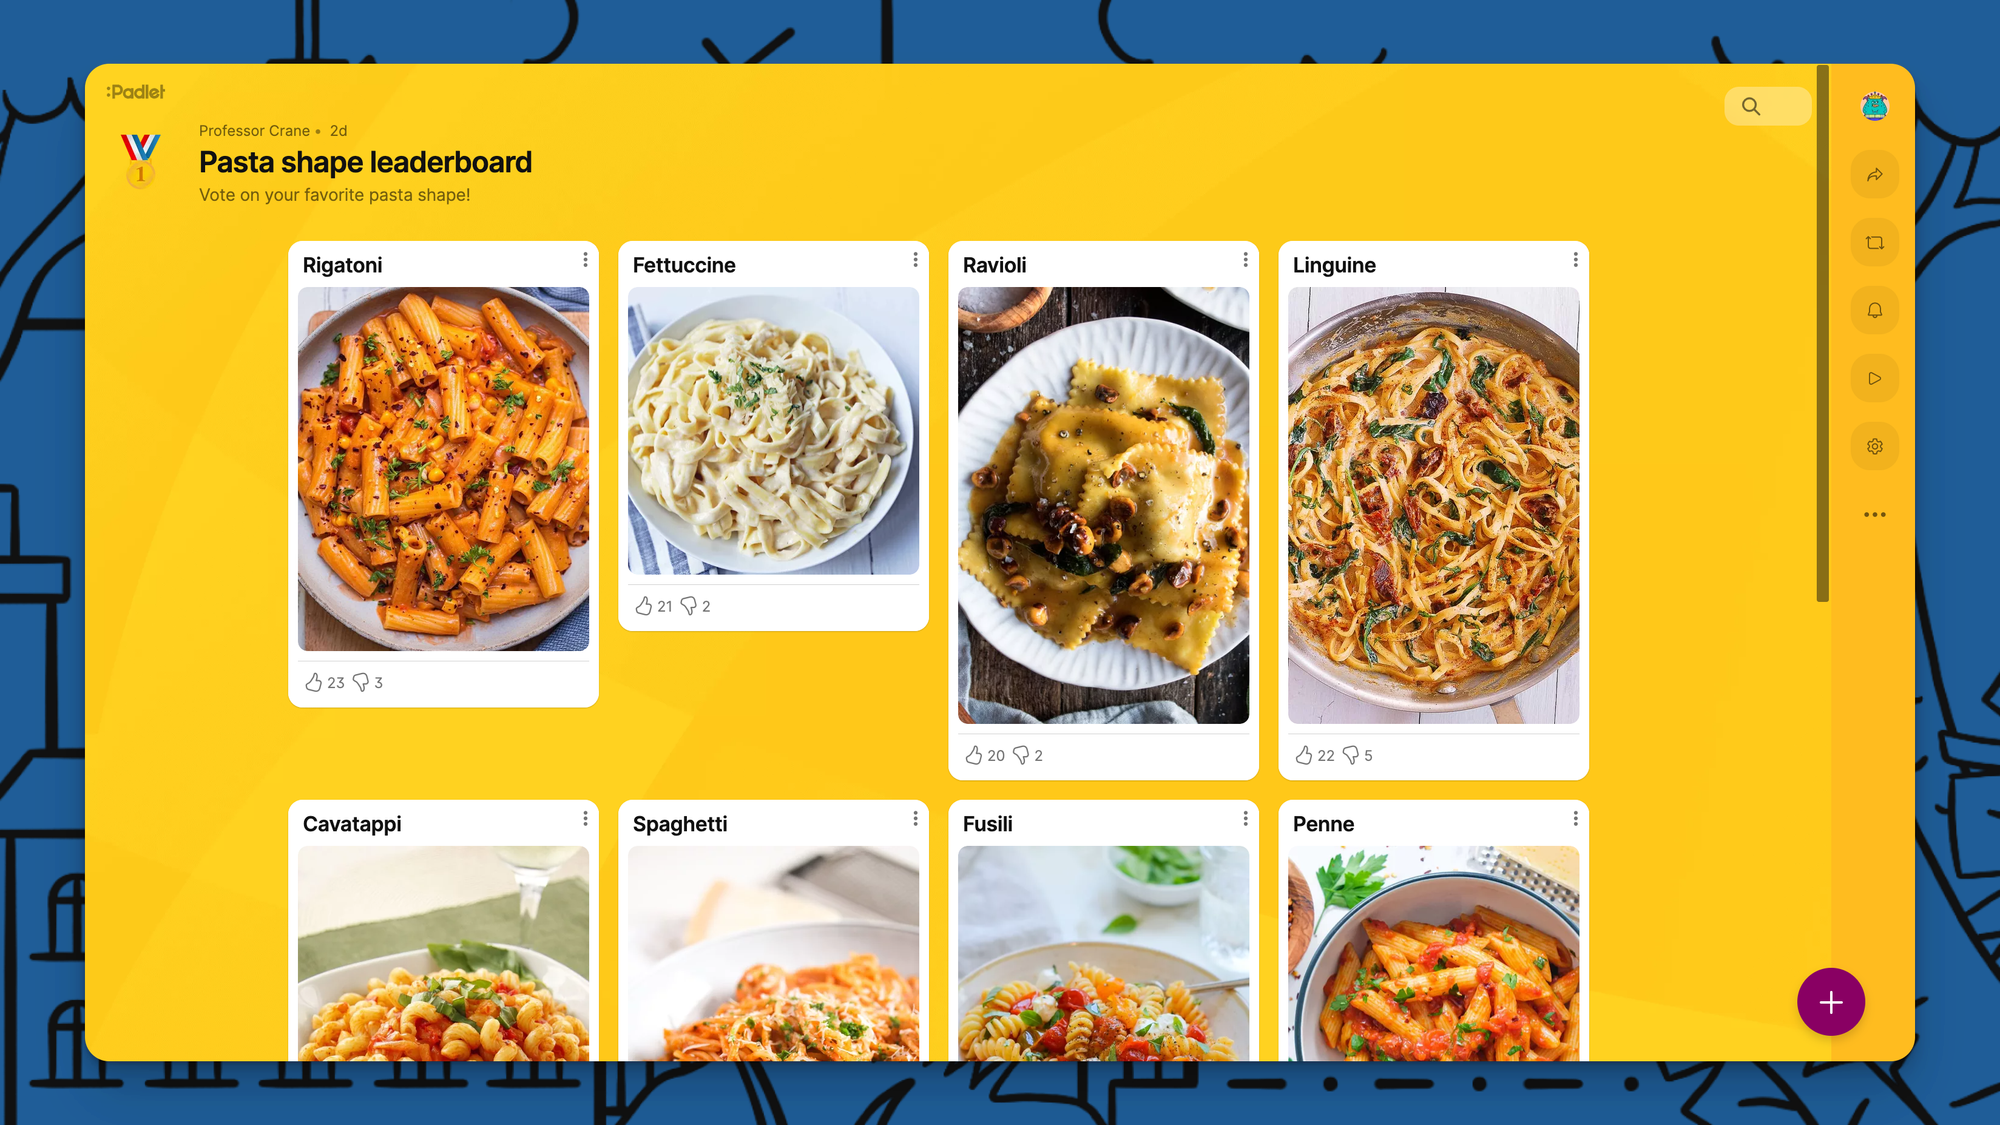 A screenshot of a pasta shape leaderboard padlet